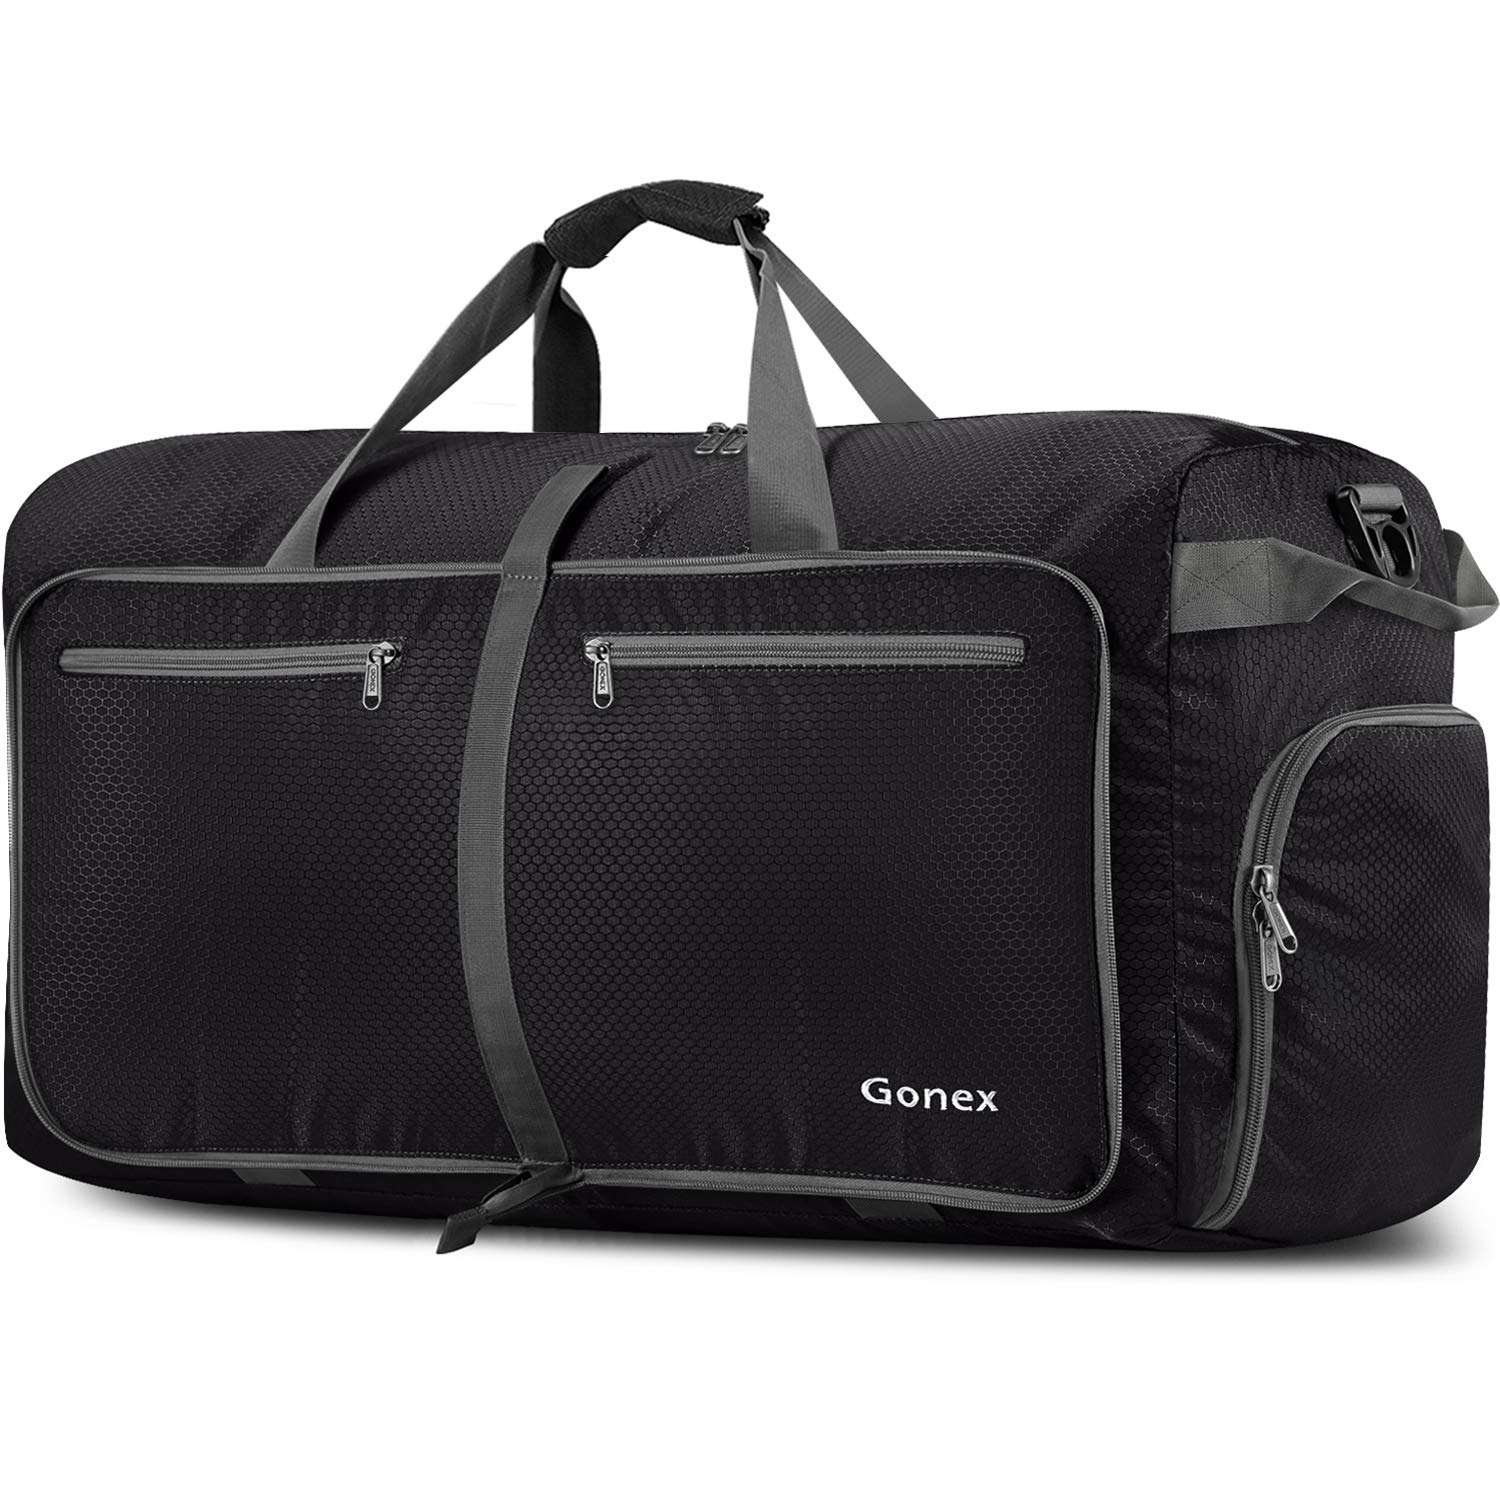 Gonex 40L duffel bag